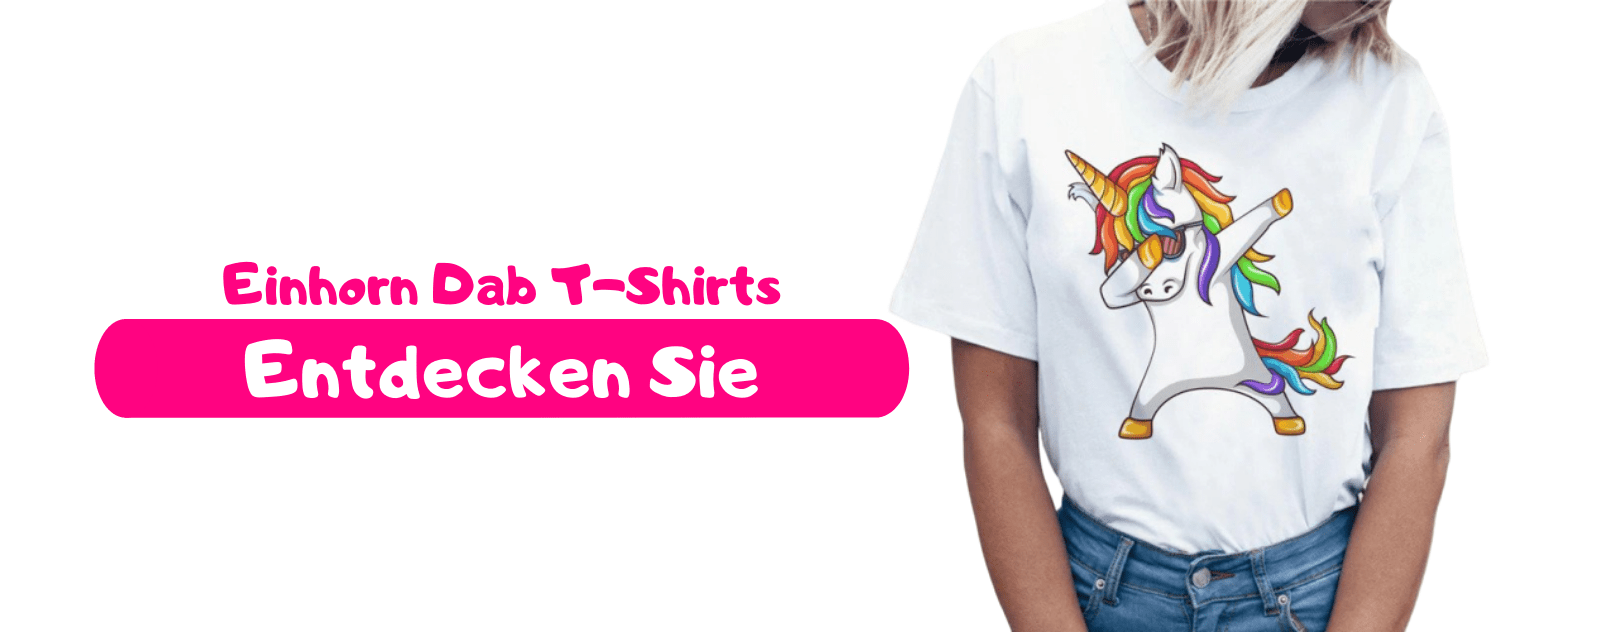 Einhorn Dab T-Shirts